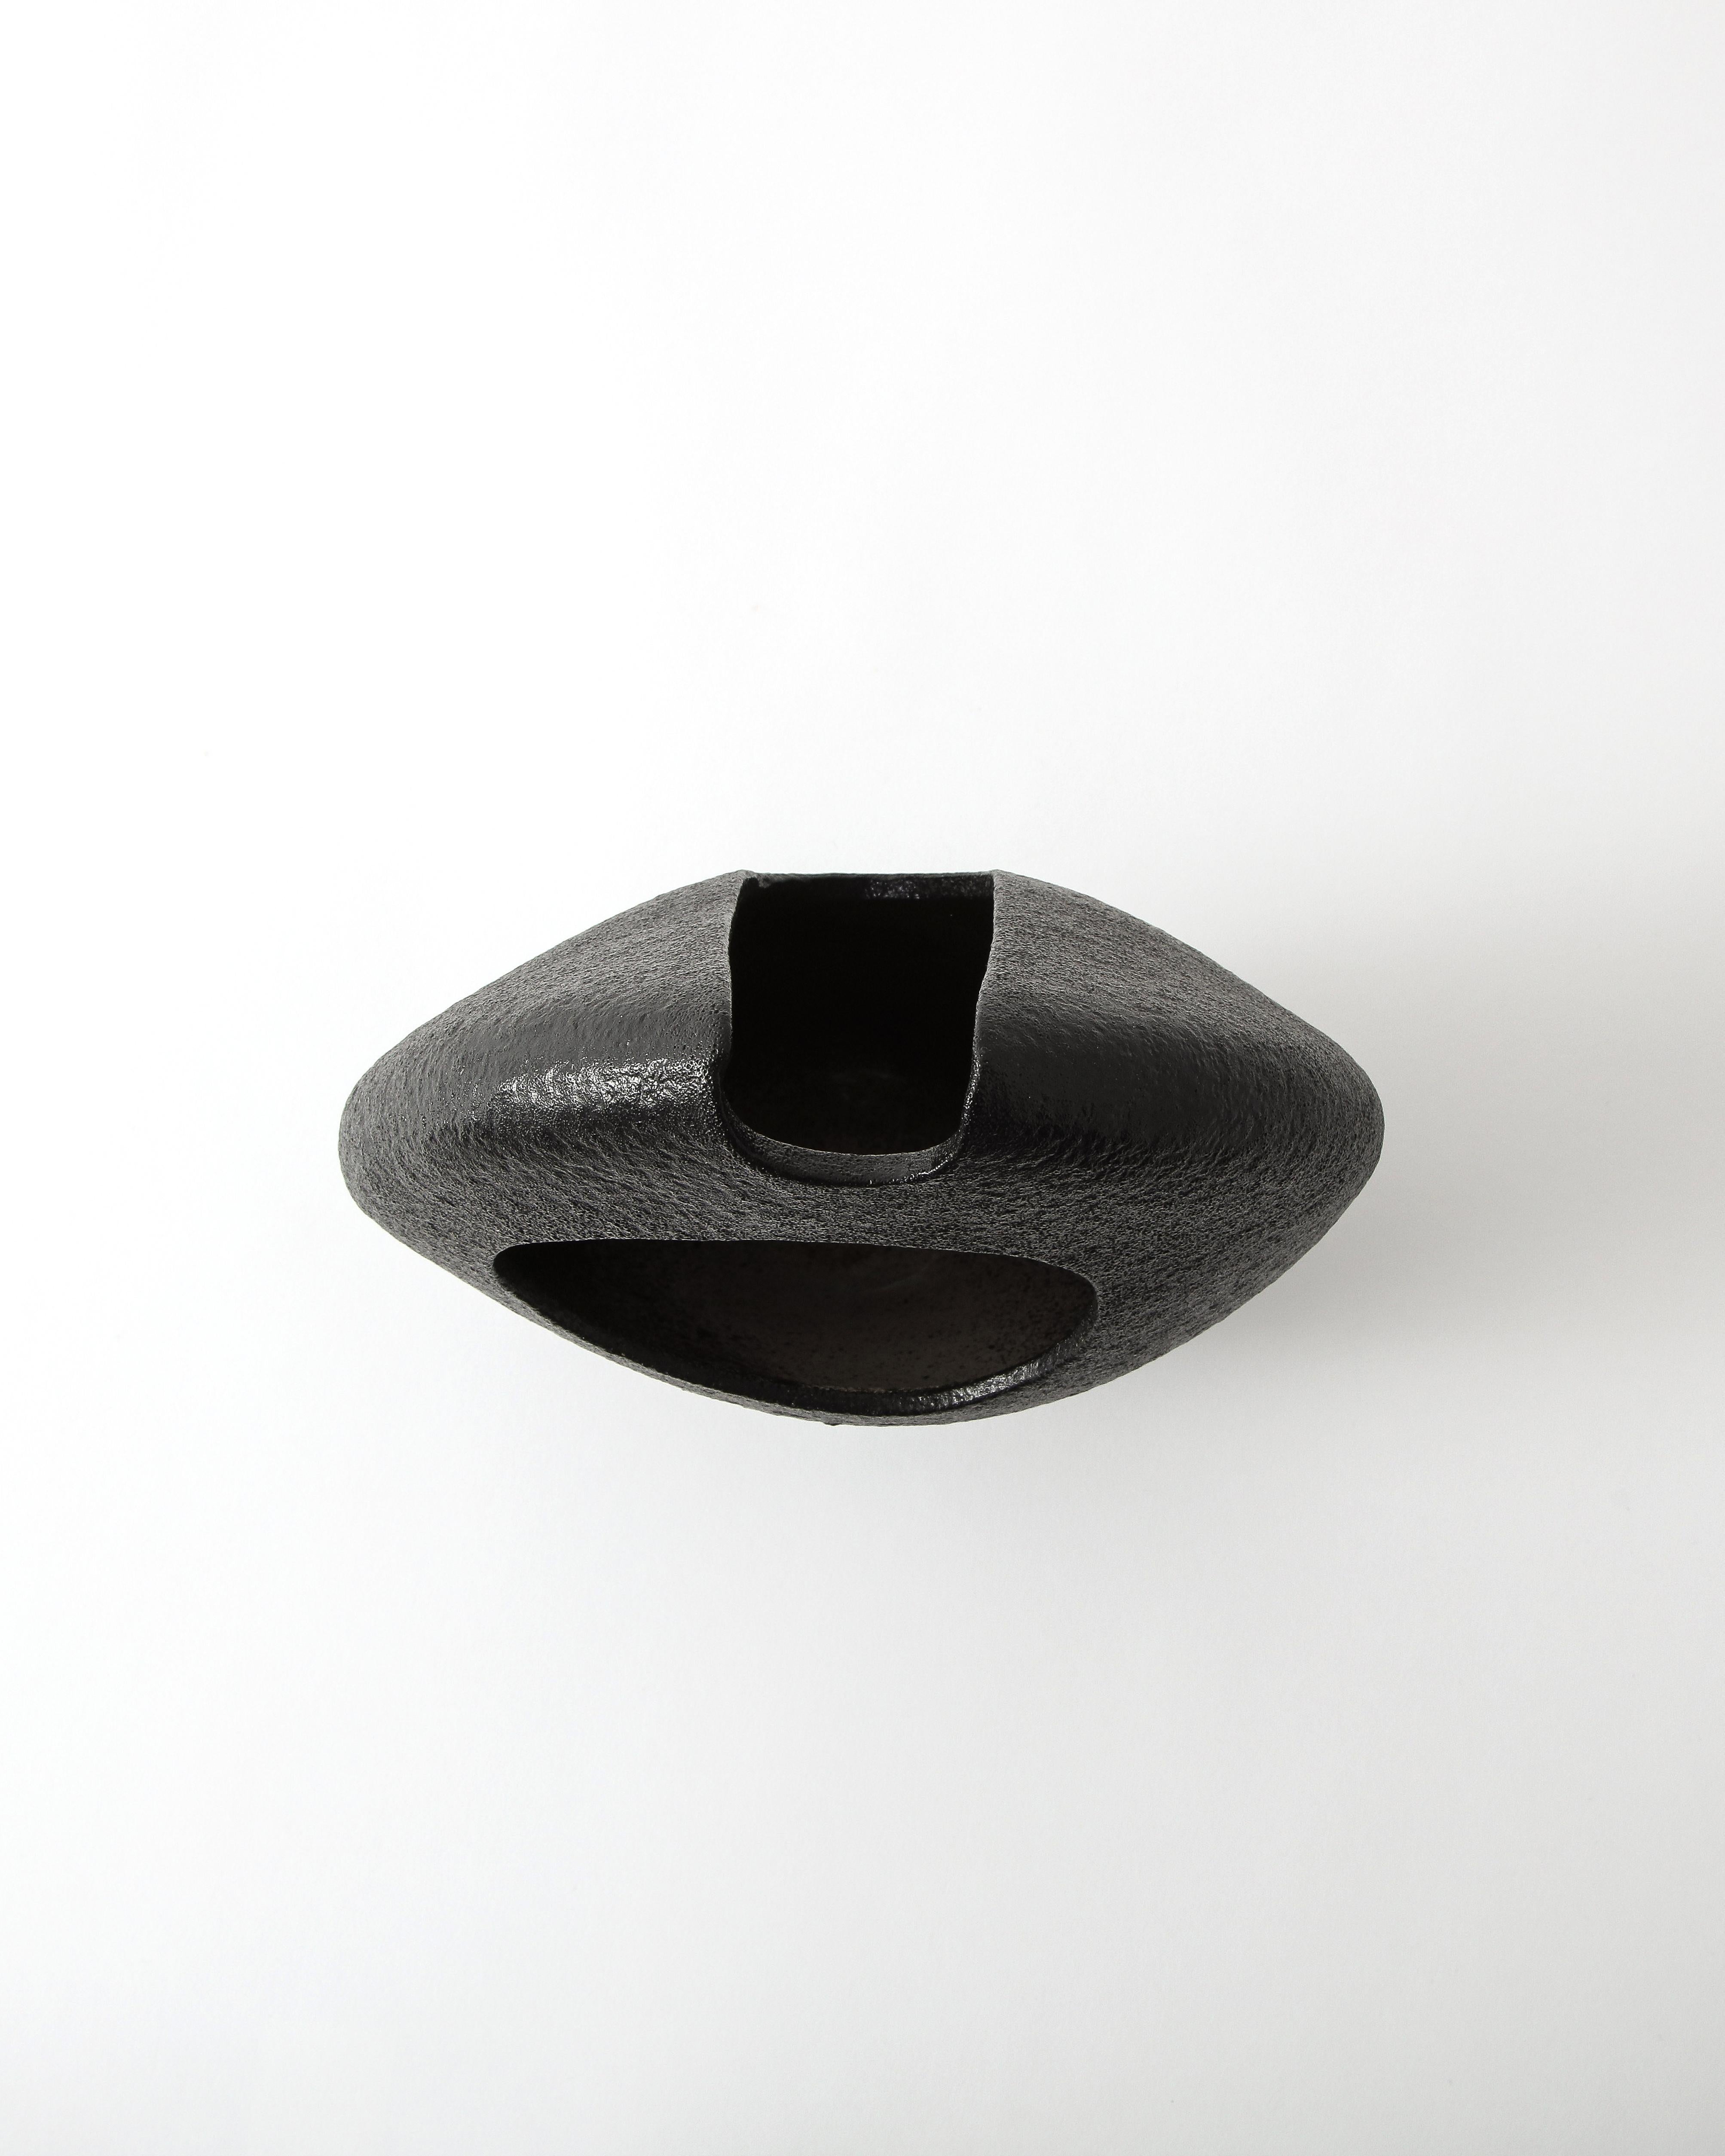 Asymmetrical Almond-Shaped Black Textured Japanese Ceramic Vessel 5